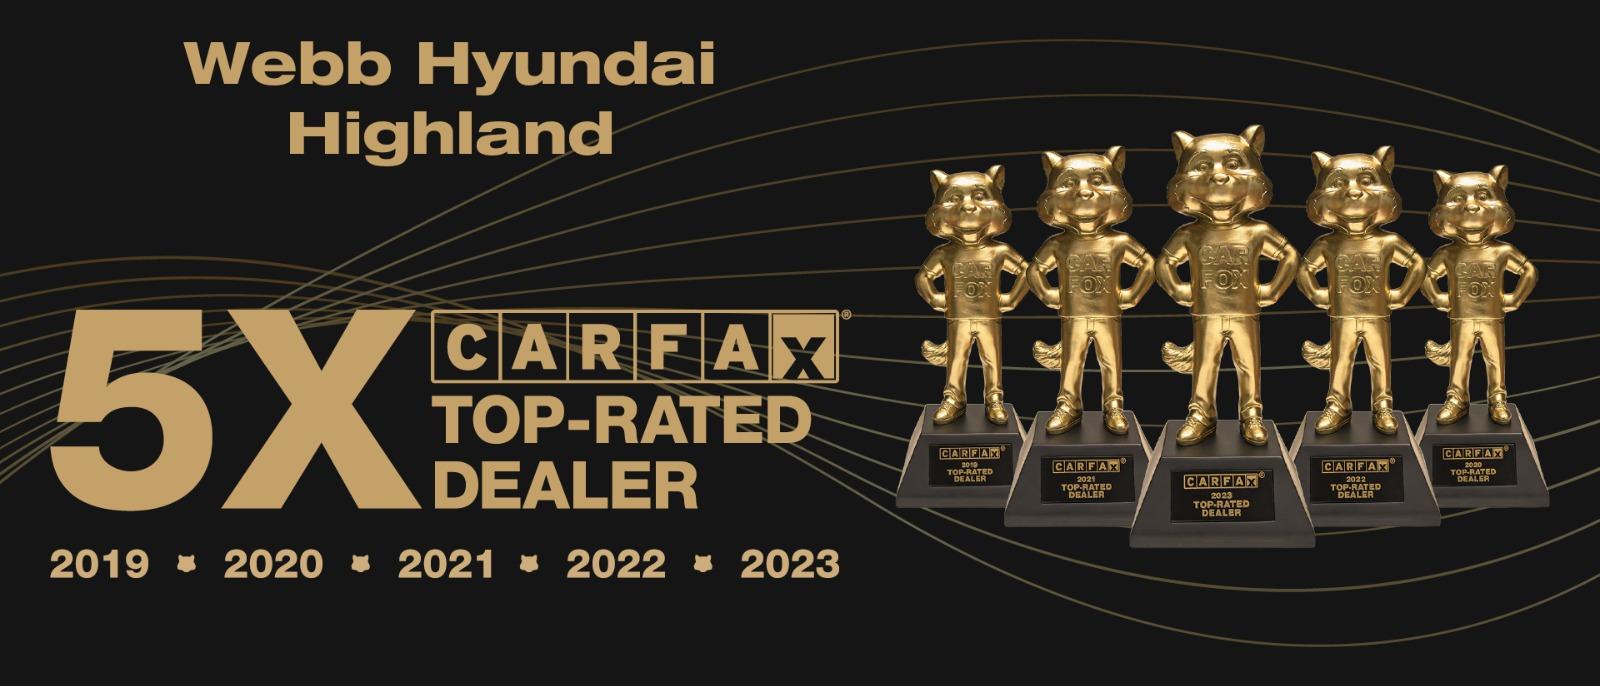 Webb Hyundai Highland 5X CarFax Top-Rated Dealer